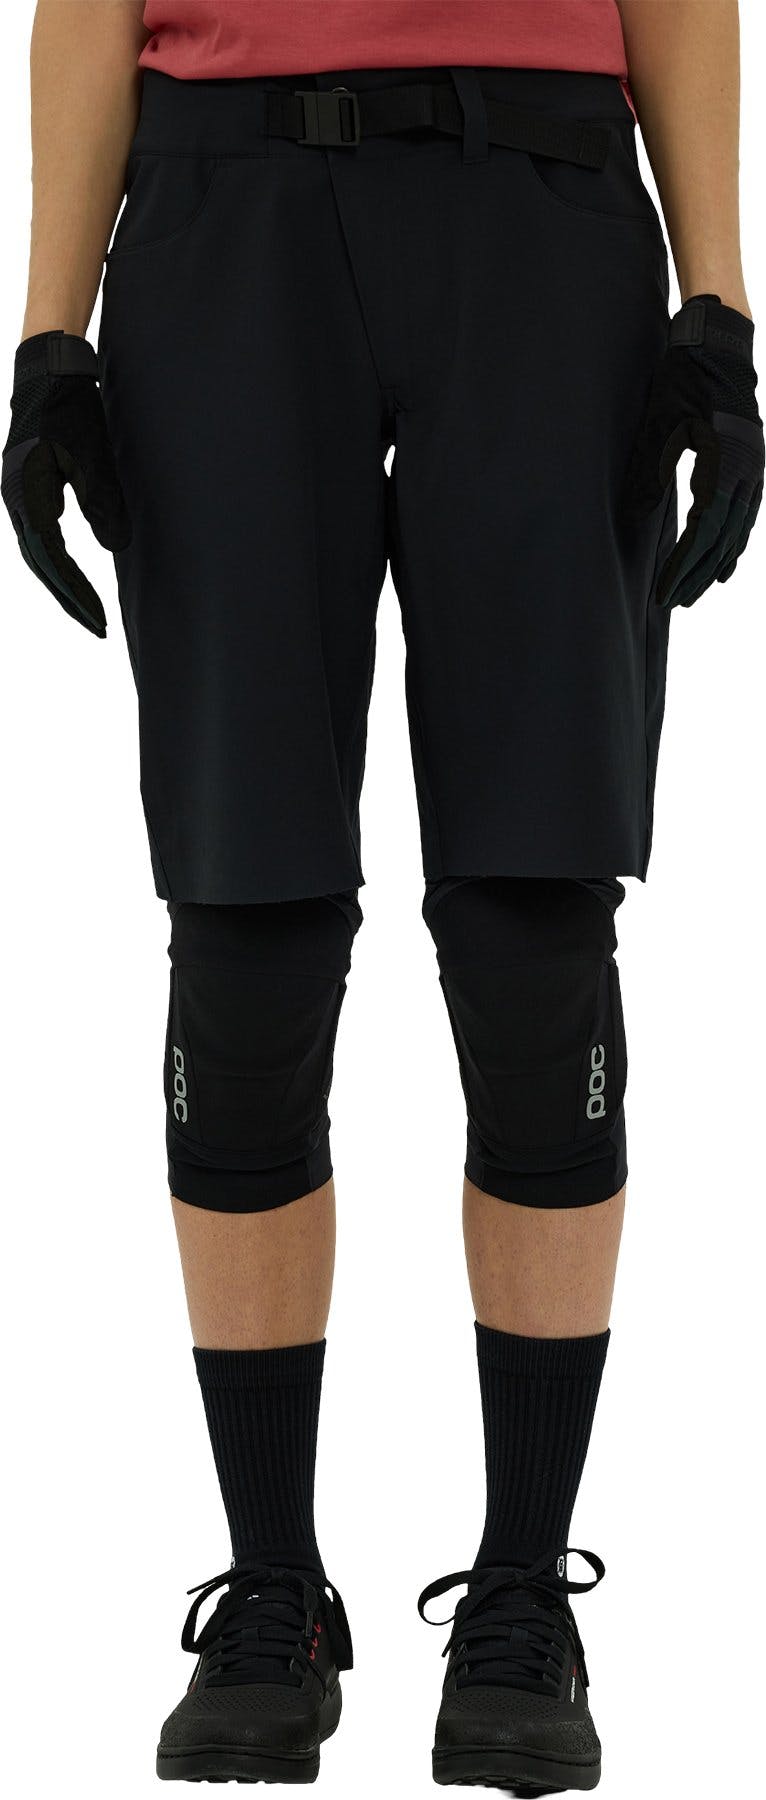 Product image for Ruskin Mountain Bike Shorts - Women's